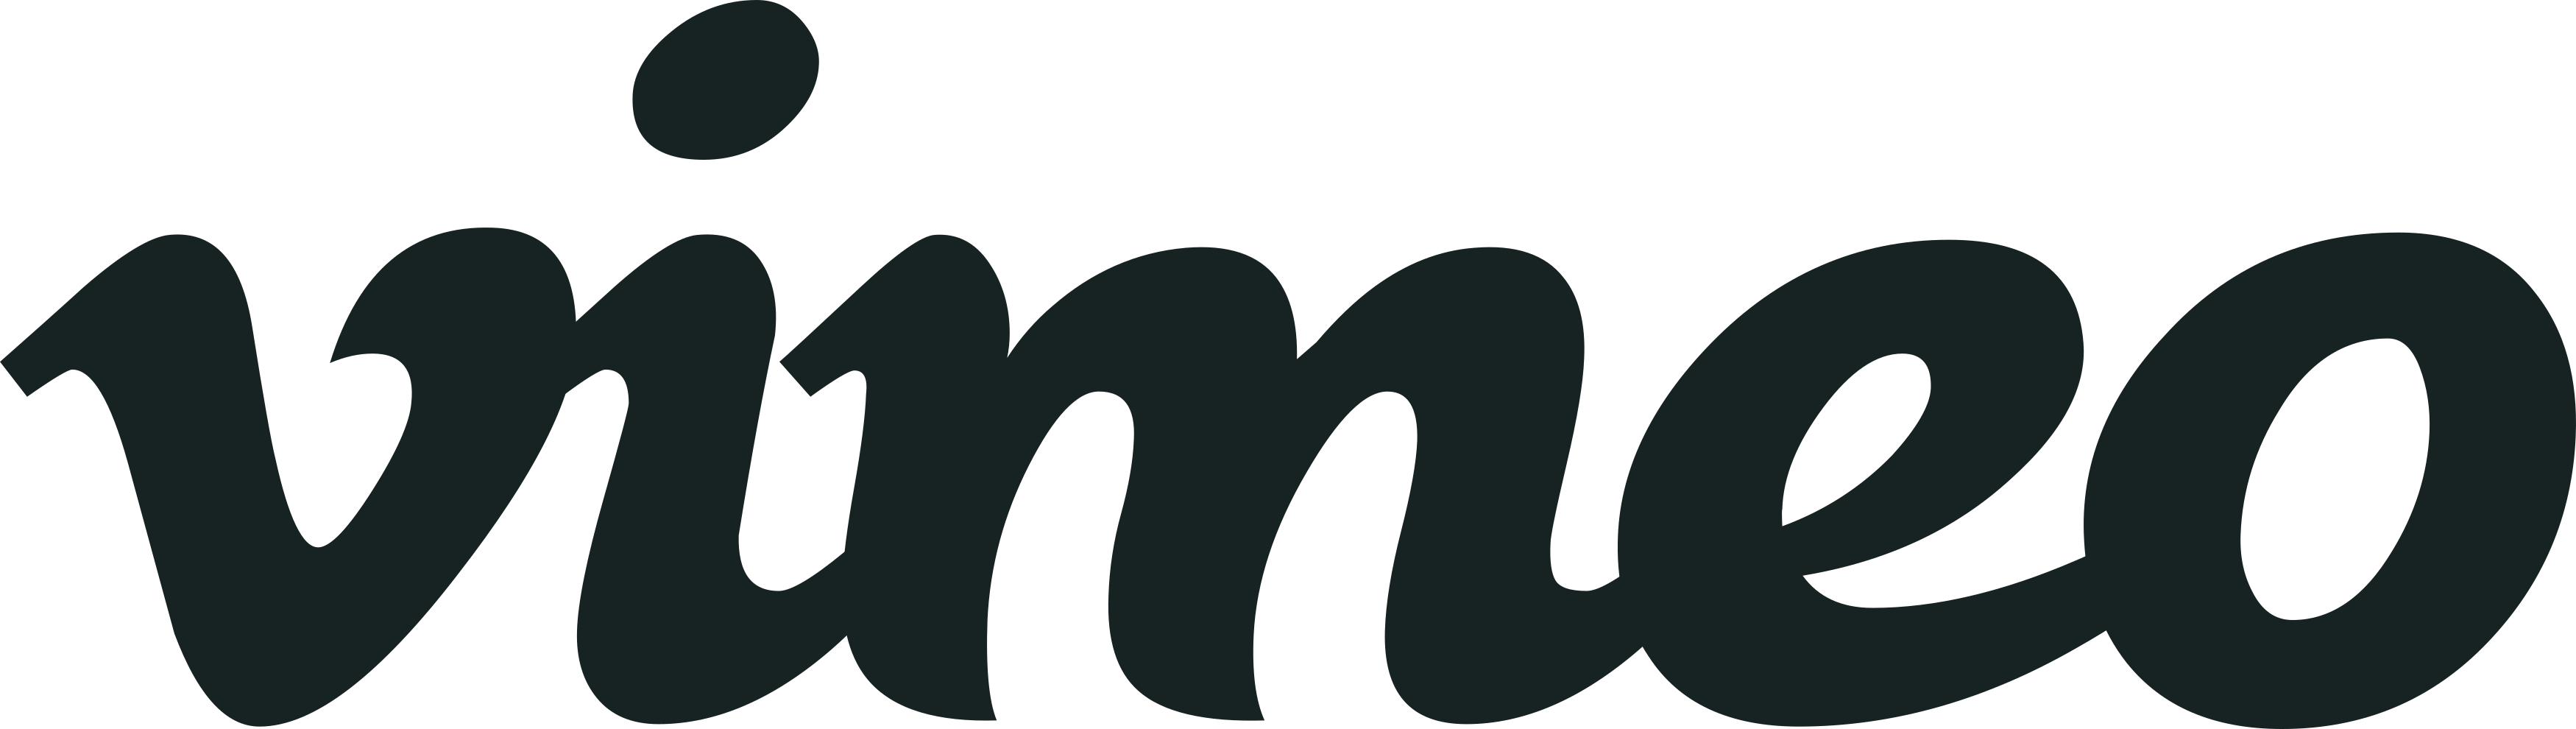 Vimeo Logo.